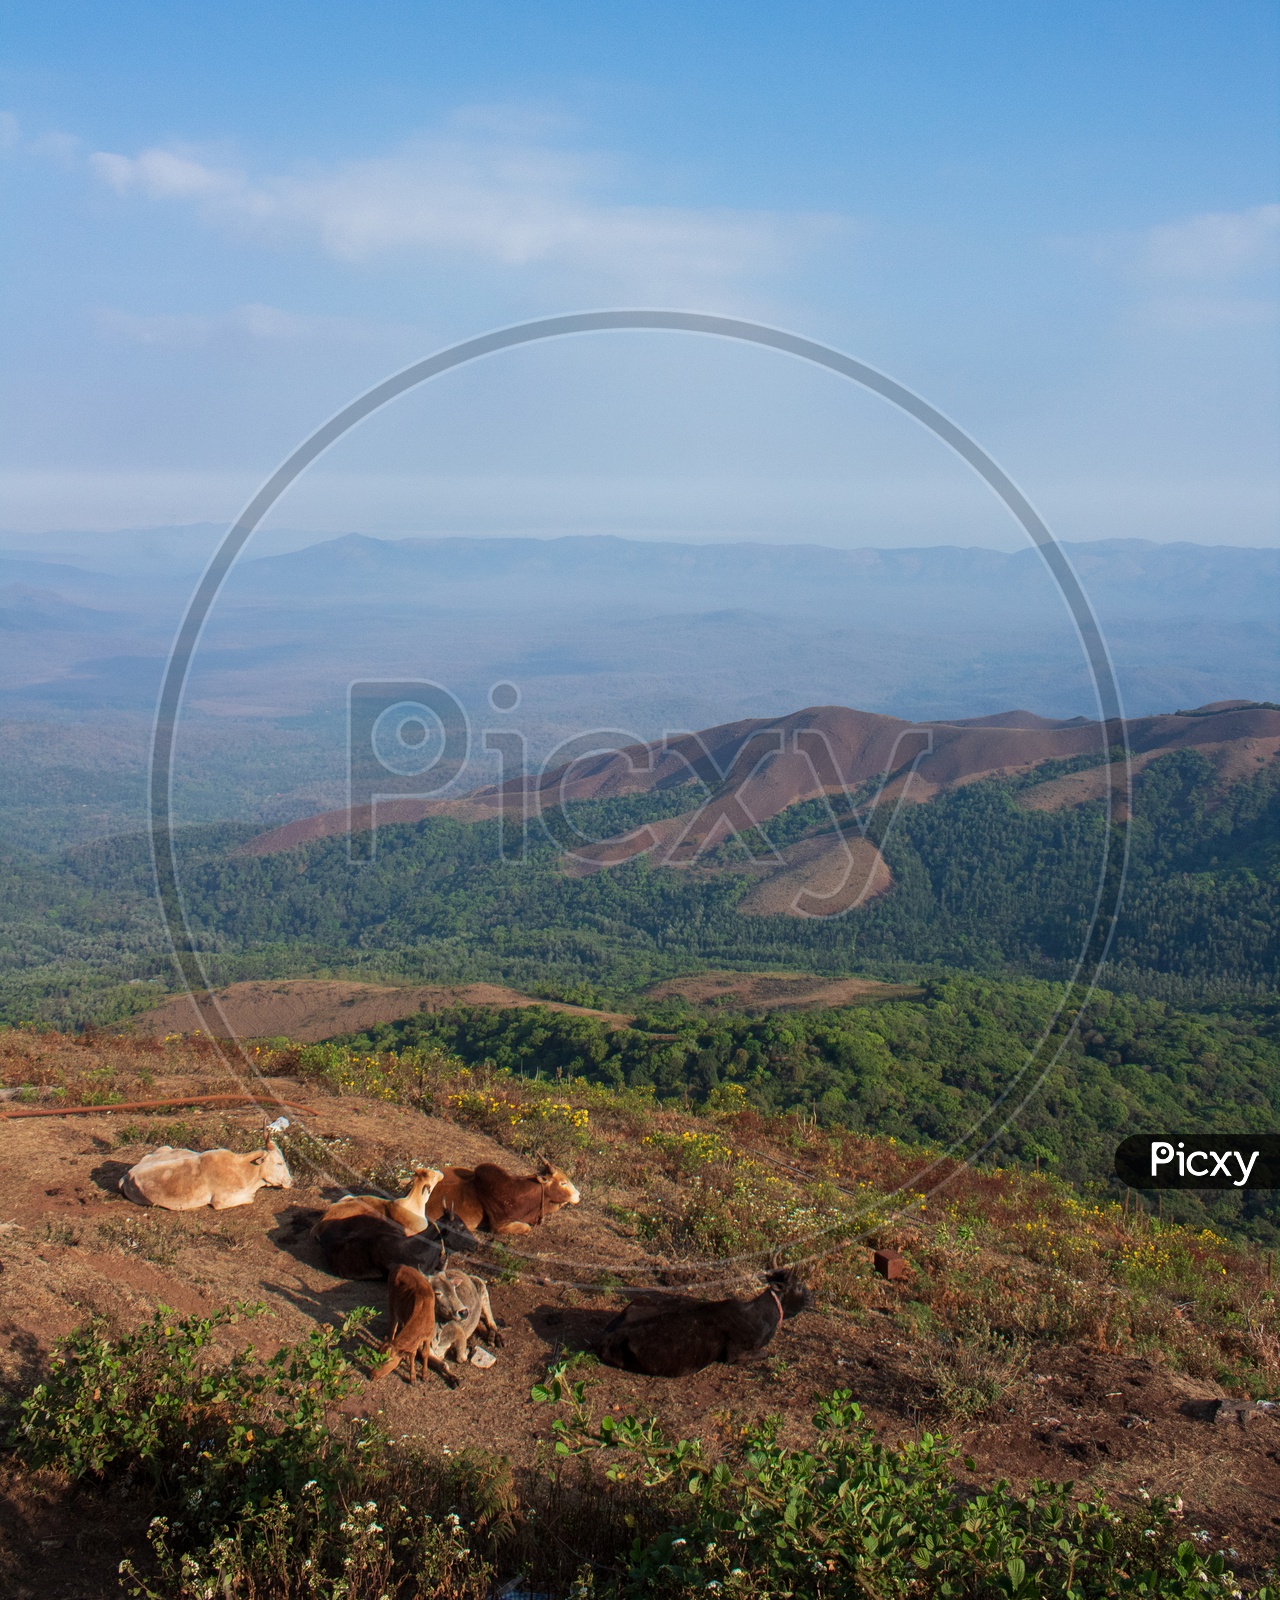 Cattle sitting on the Mullayanagiri Peak, Chikmagalur, Karnataka